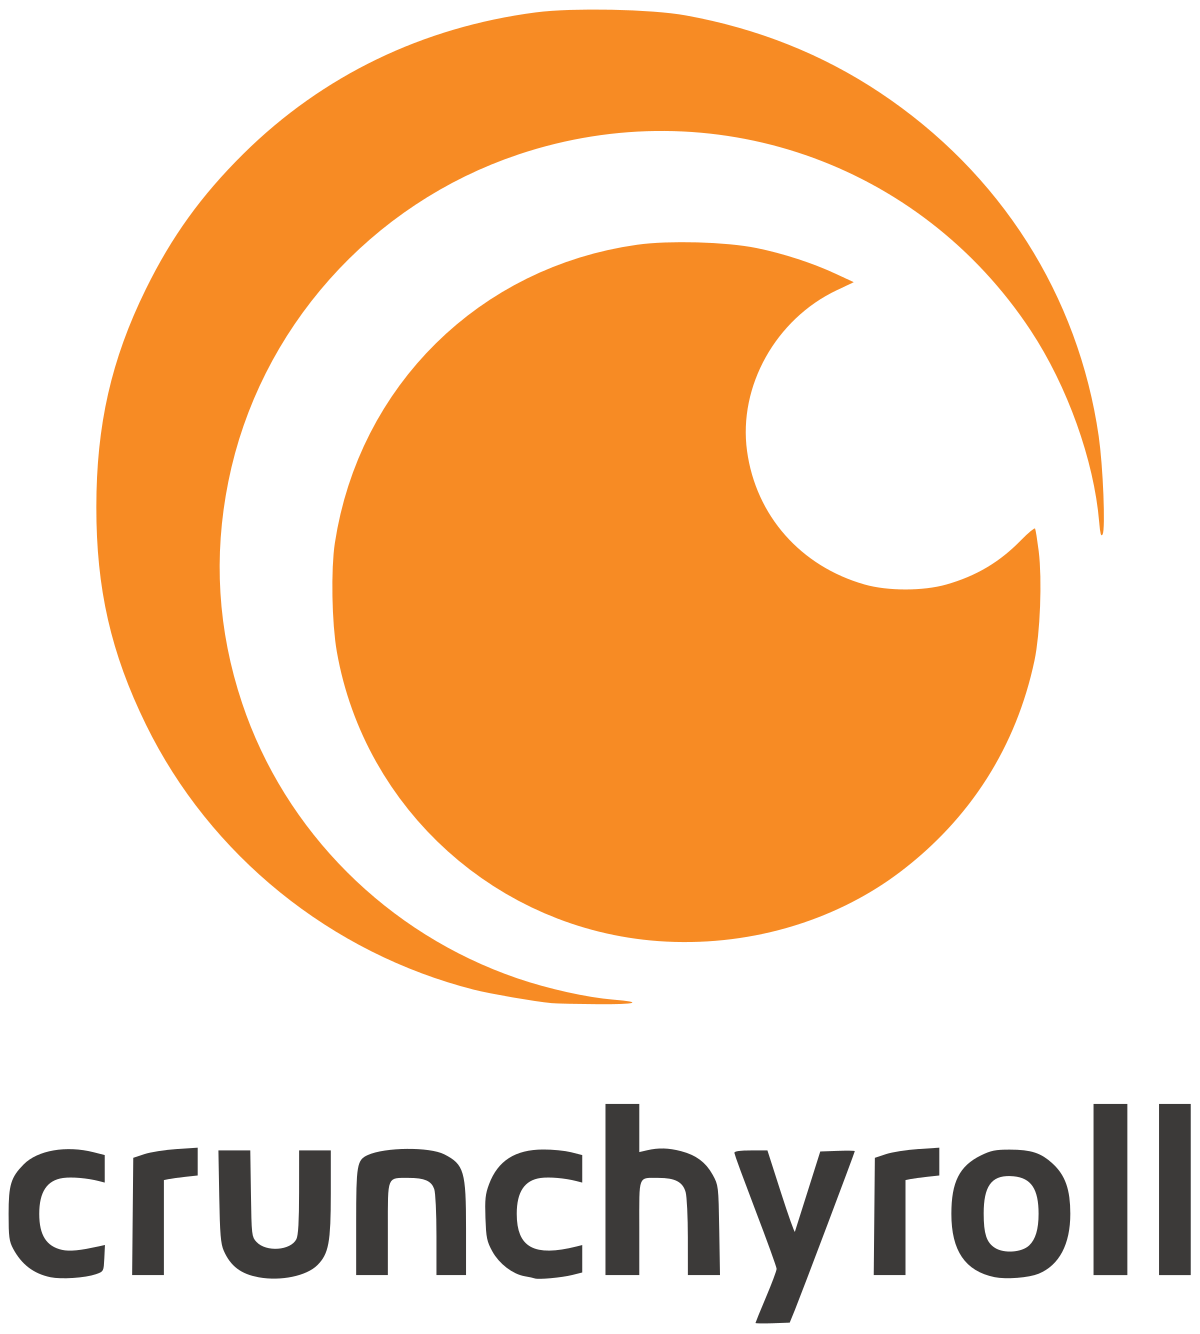 Crunchyroll to Stream My Hero Academia Season 6 - Crunchyroll News